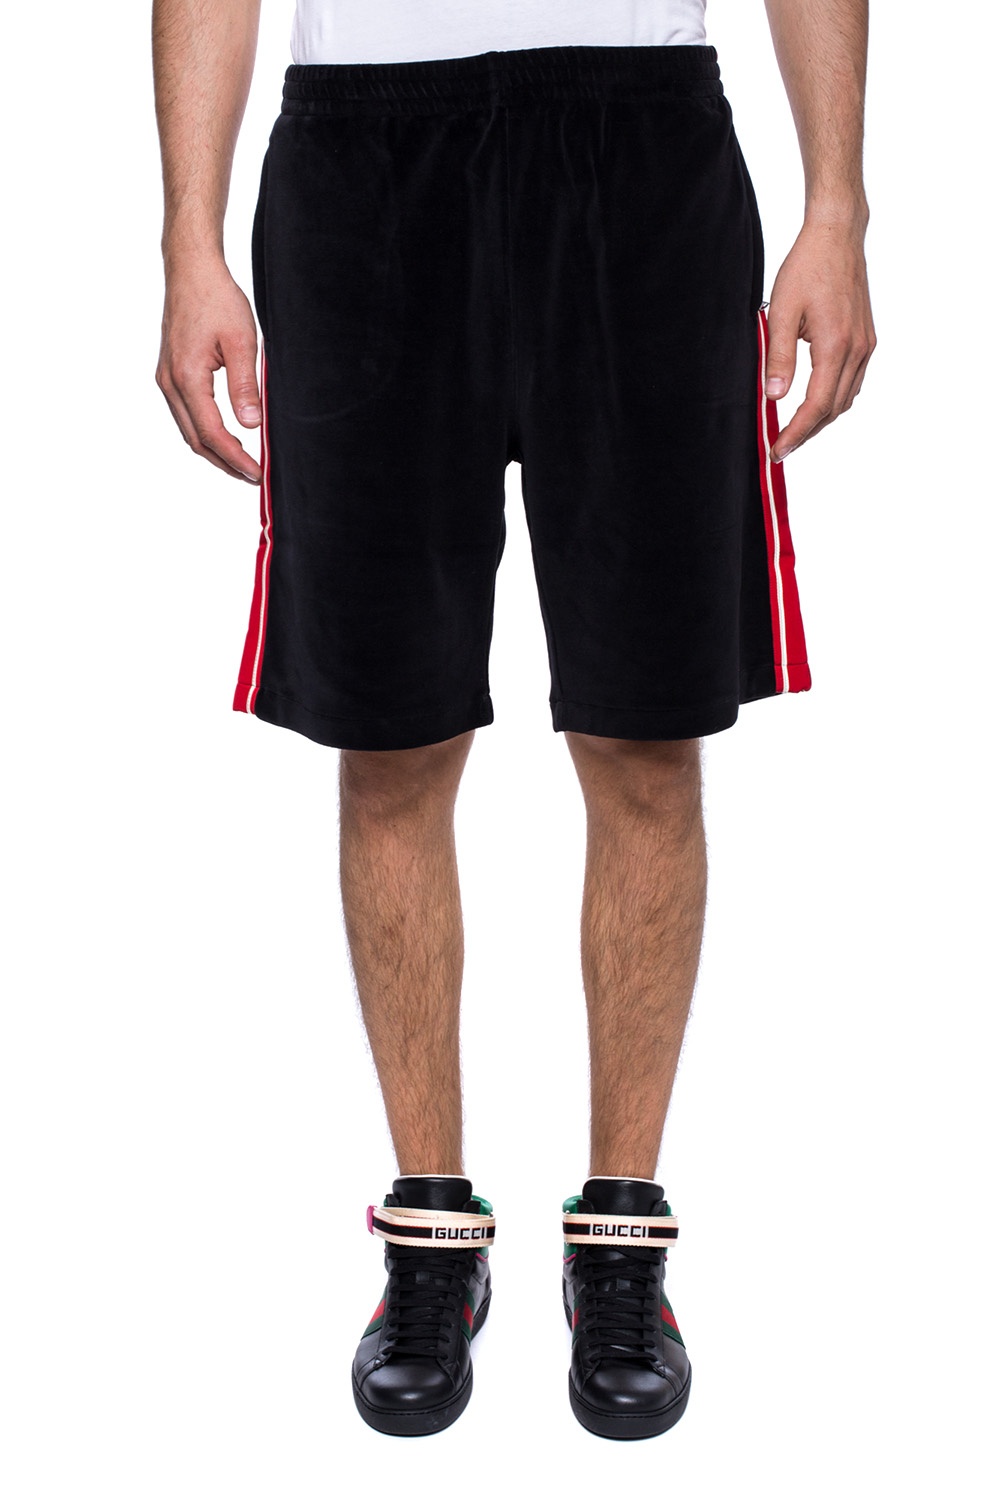 gucci velvet shorts